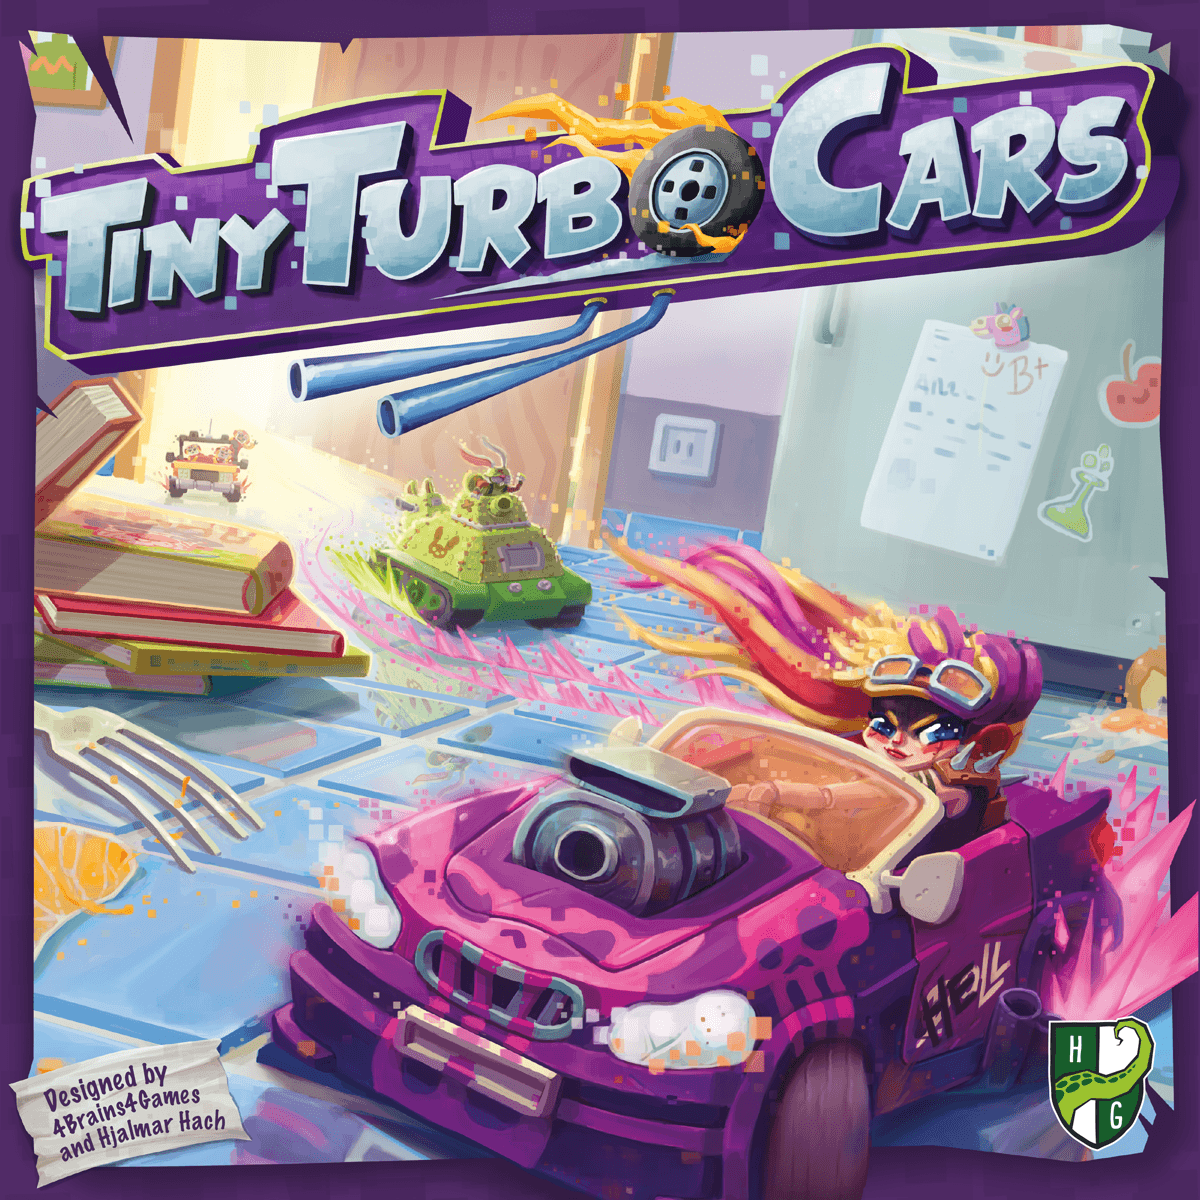 Horrible Guild Tiny Turbo Cars